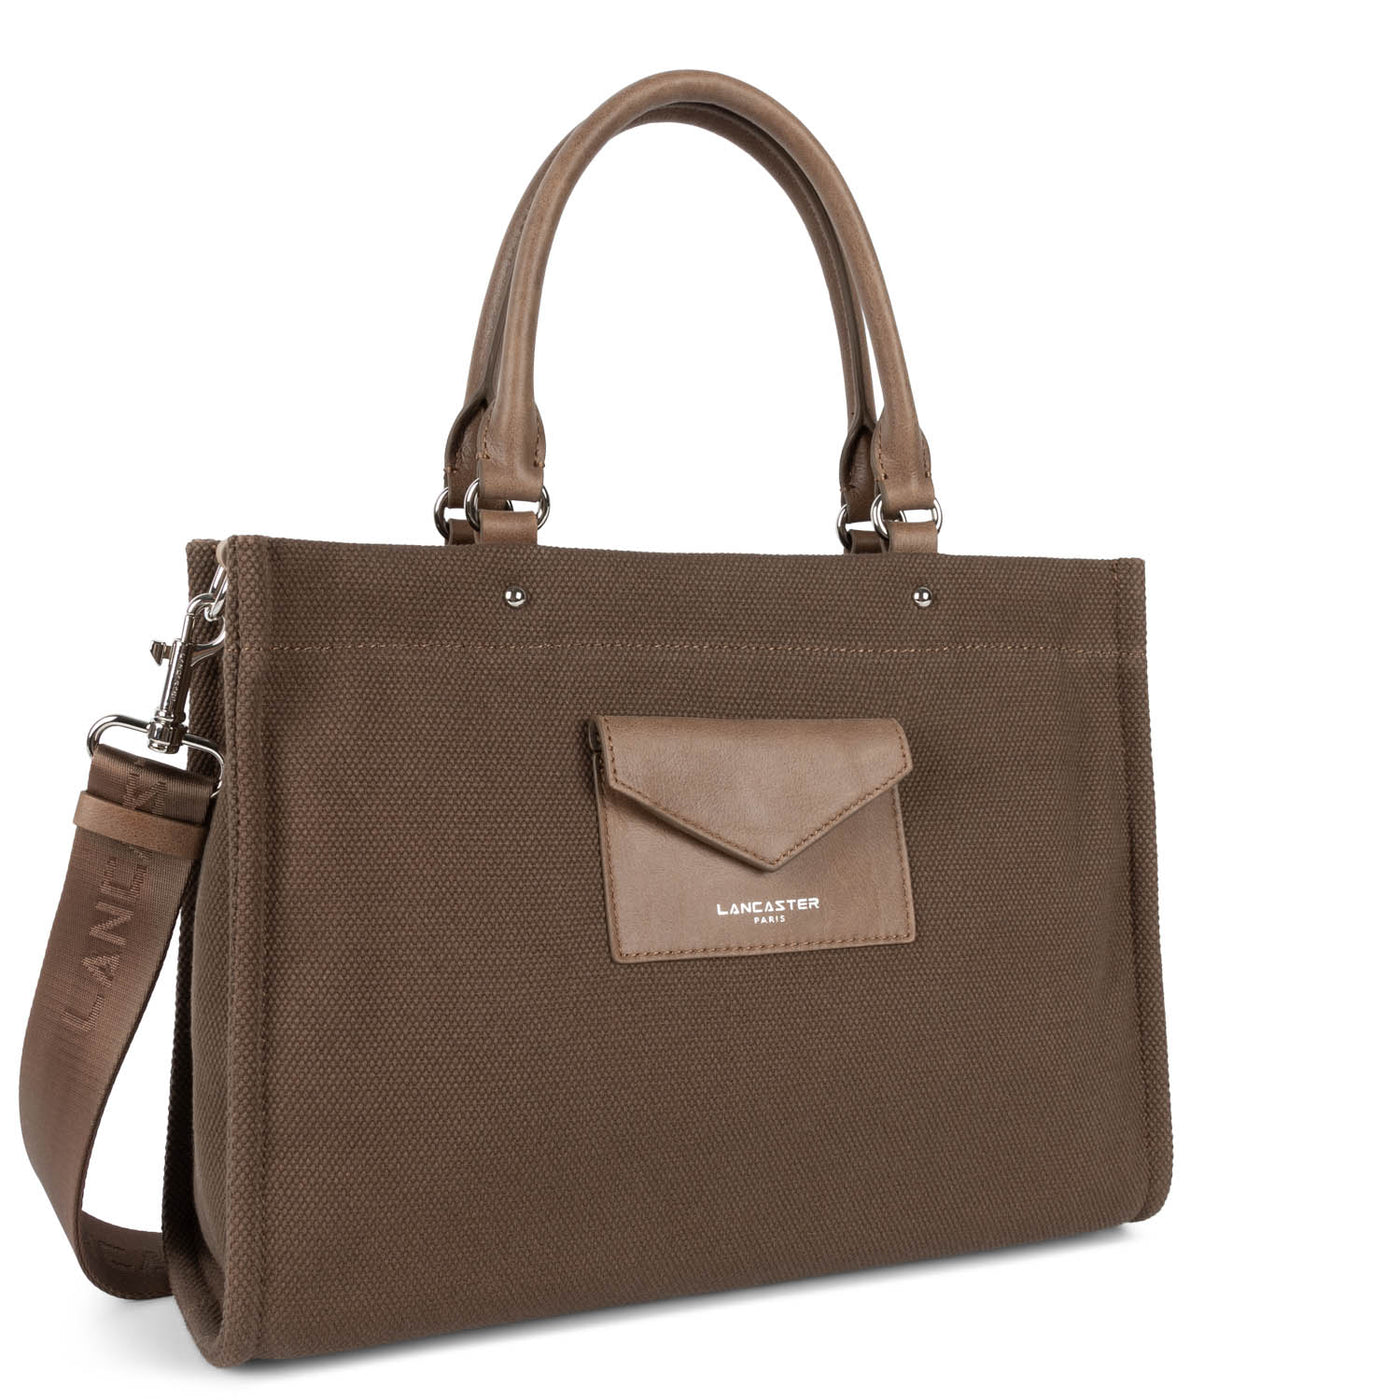 shoulder bag - smart kba #couleur_marron